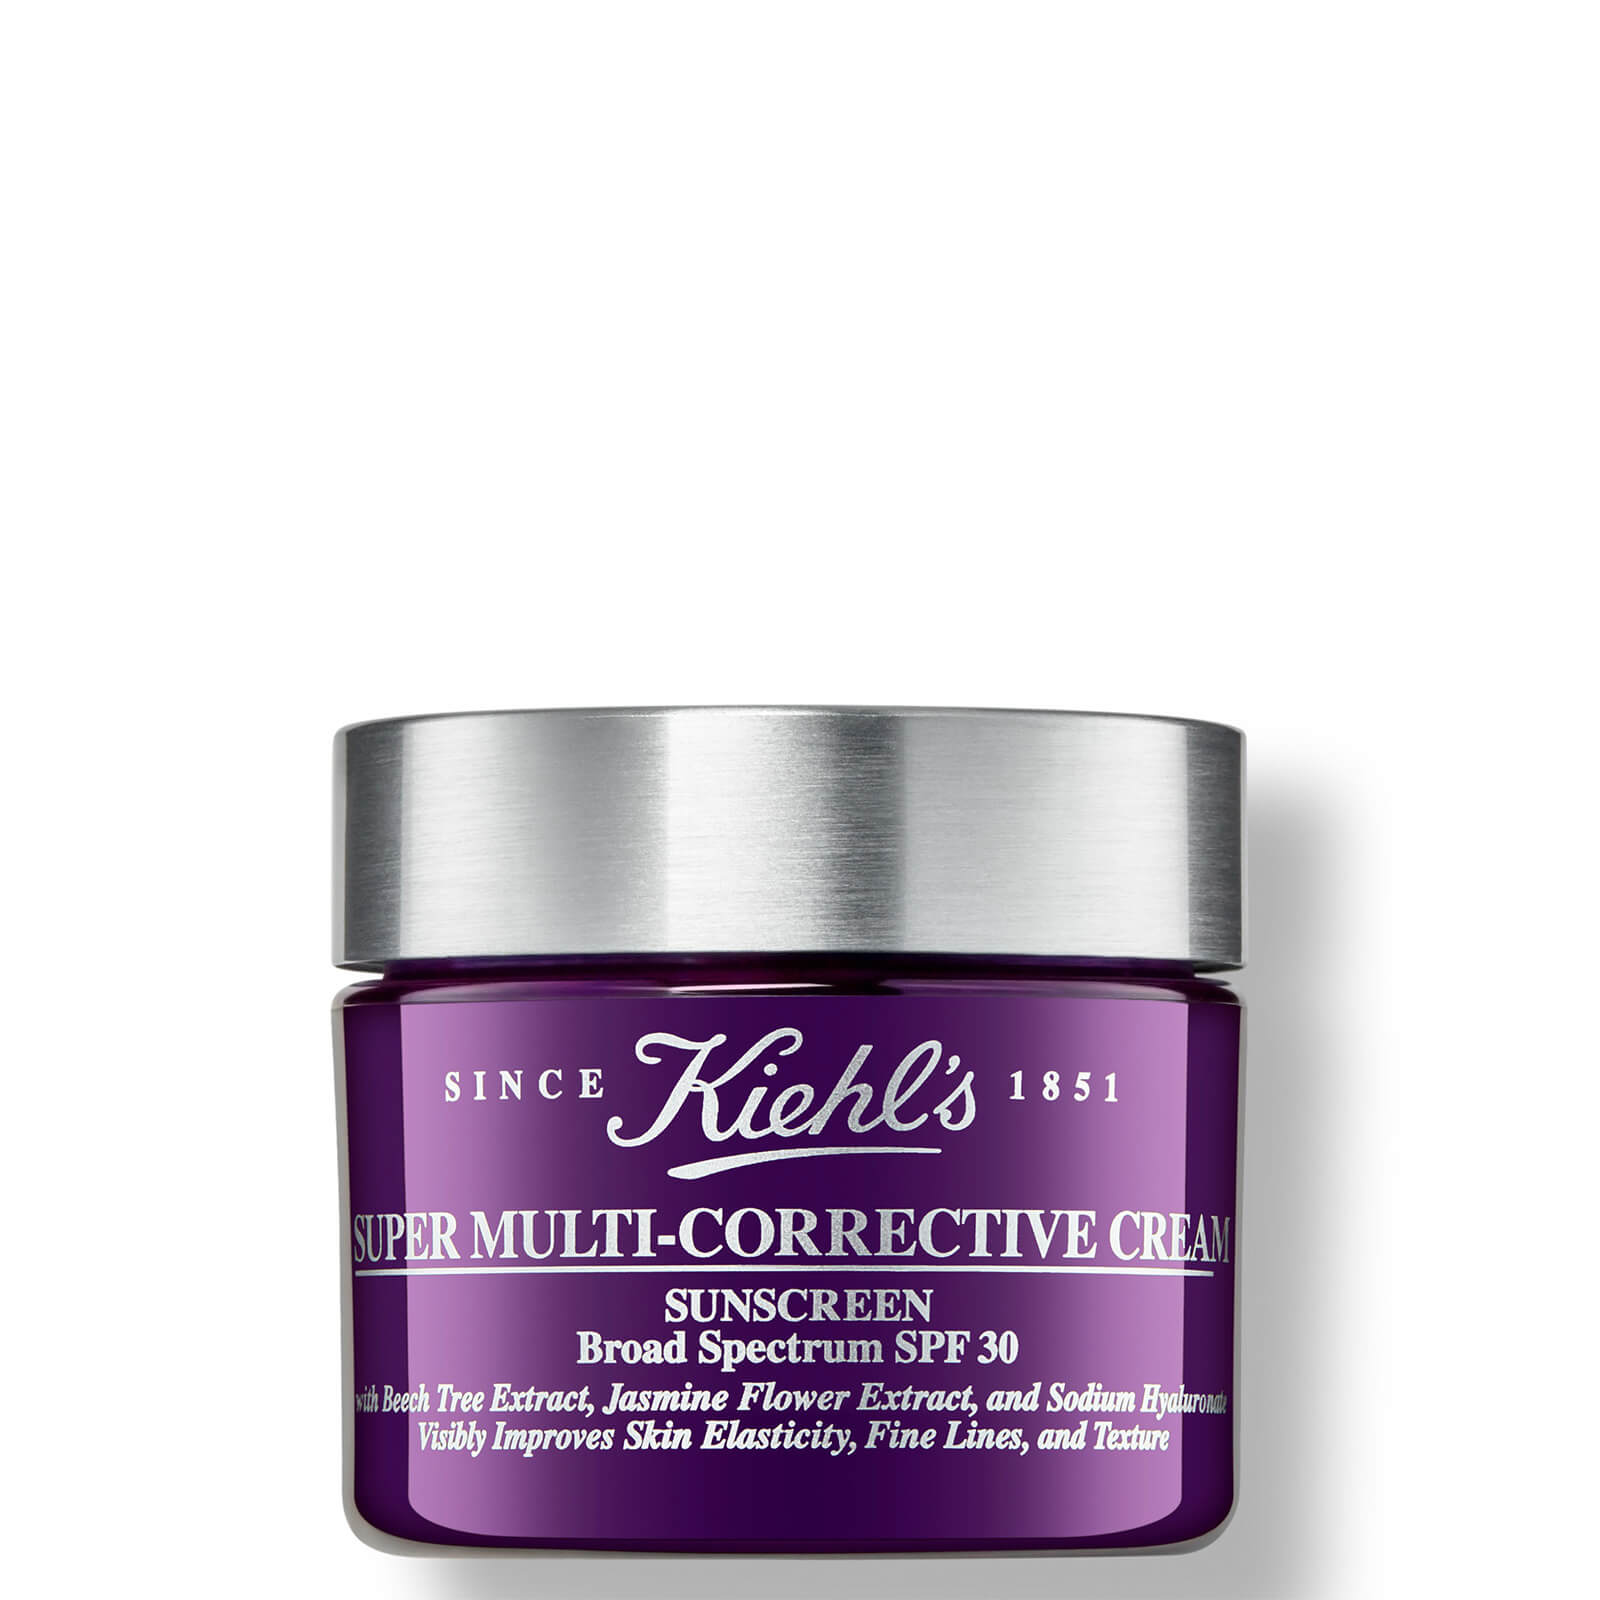 Photos - Cream / Lotion Kiehls Kiehl's Super Multi-Corrective Cream SPF 30 50ml 